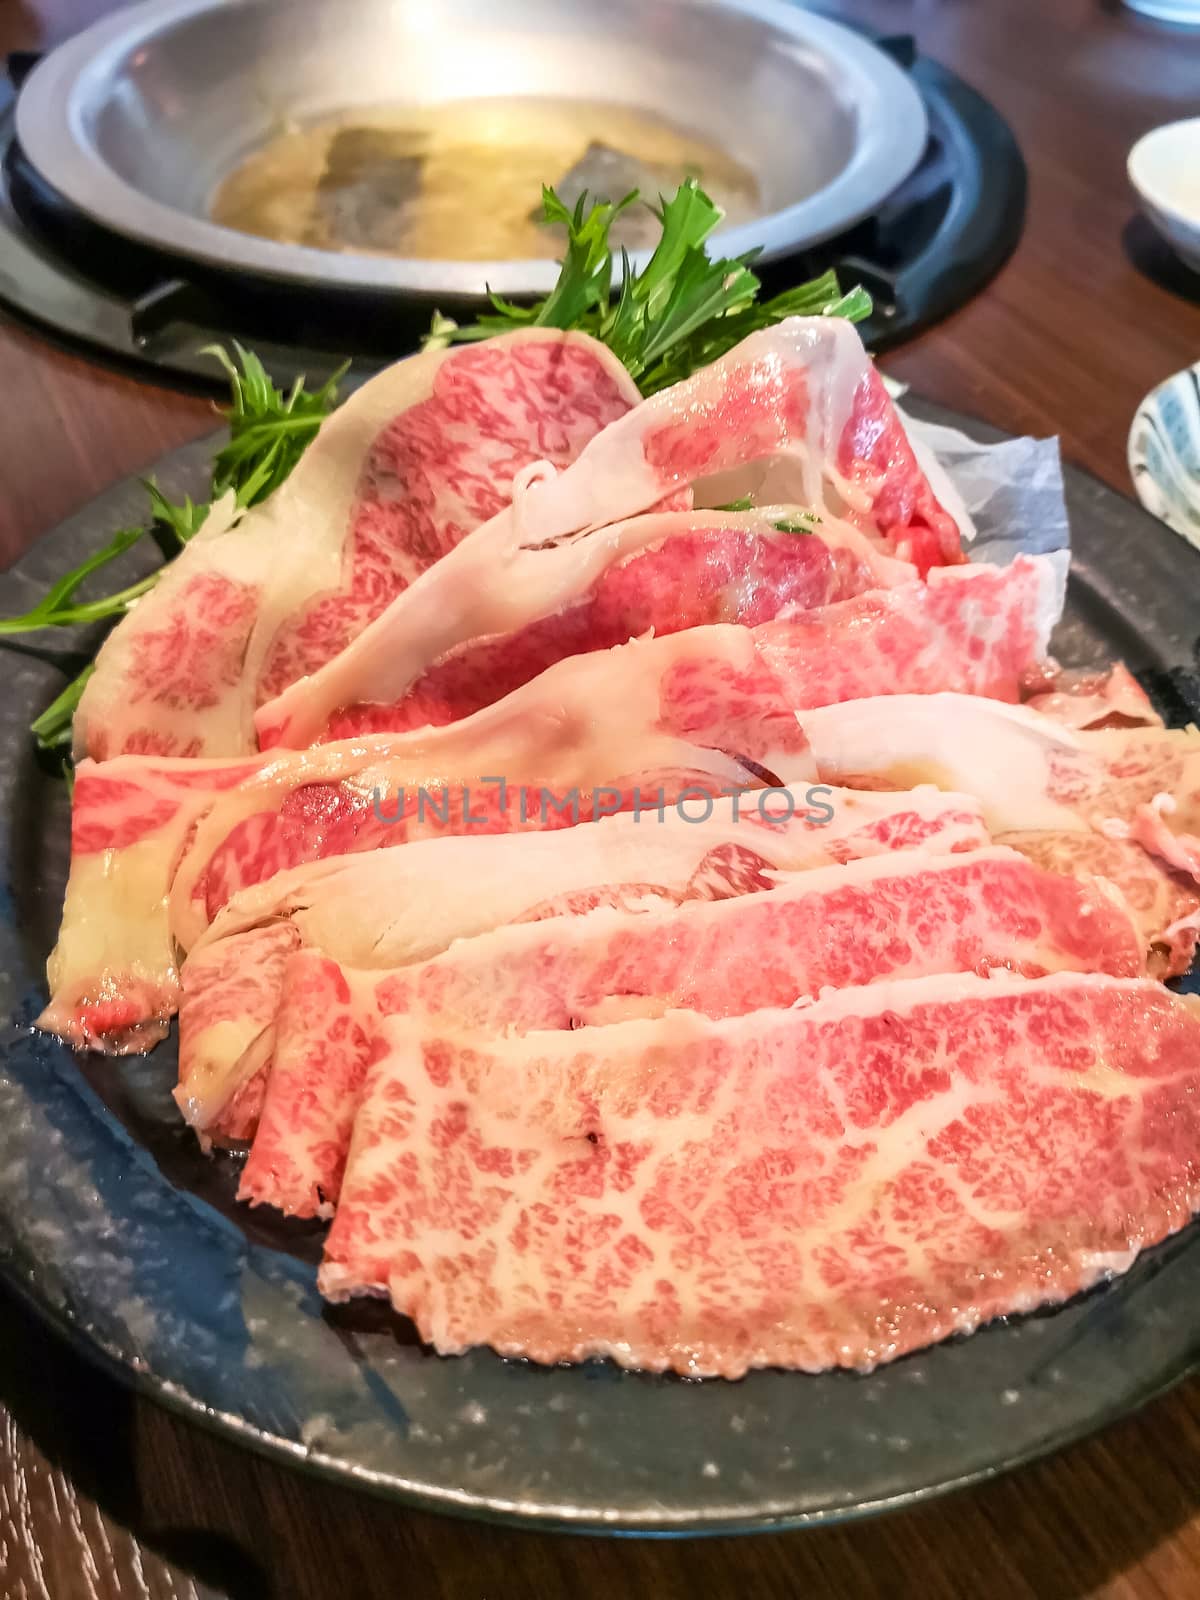 Okinawa style local beef dish in Naha, Japan